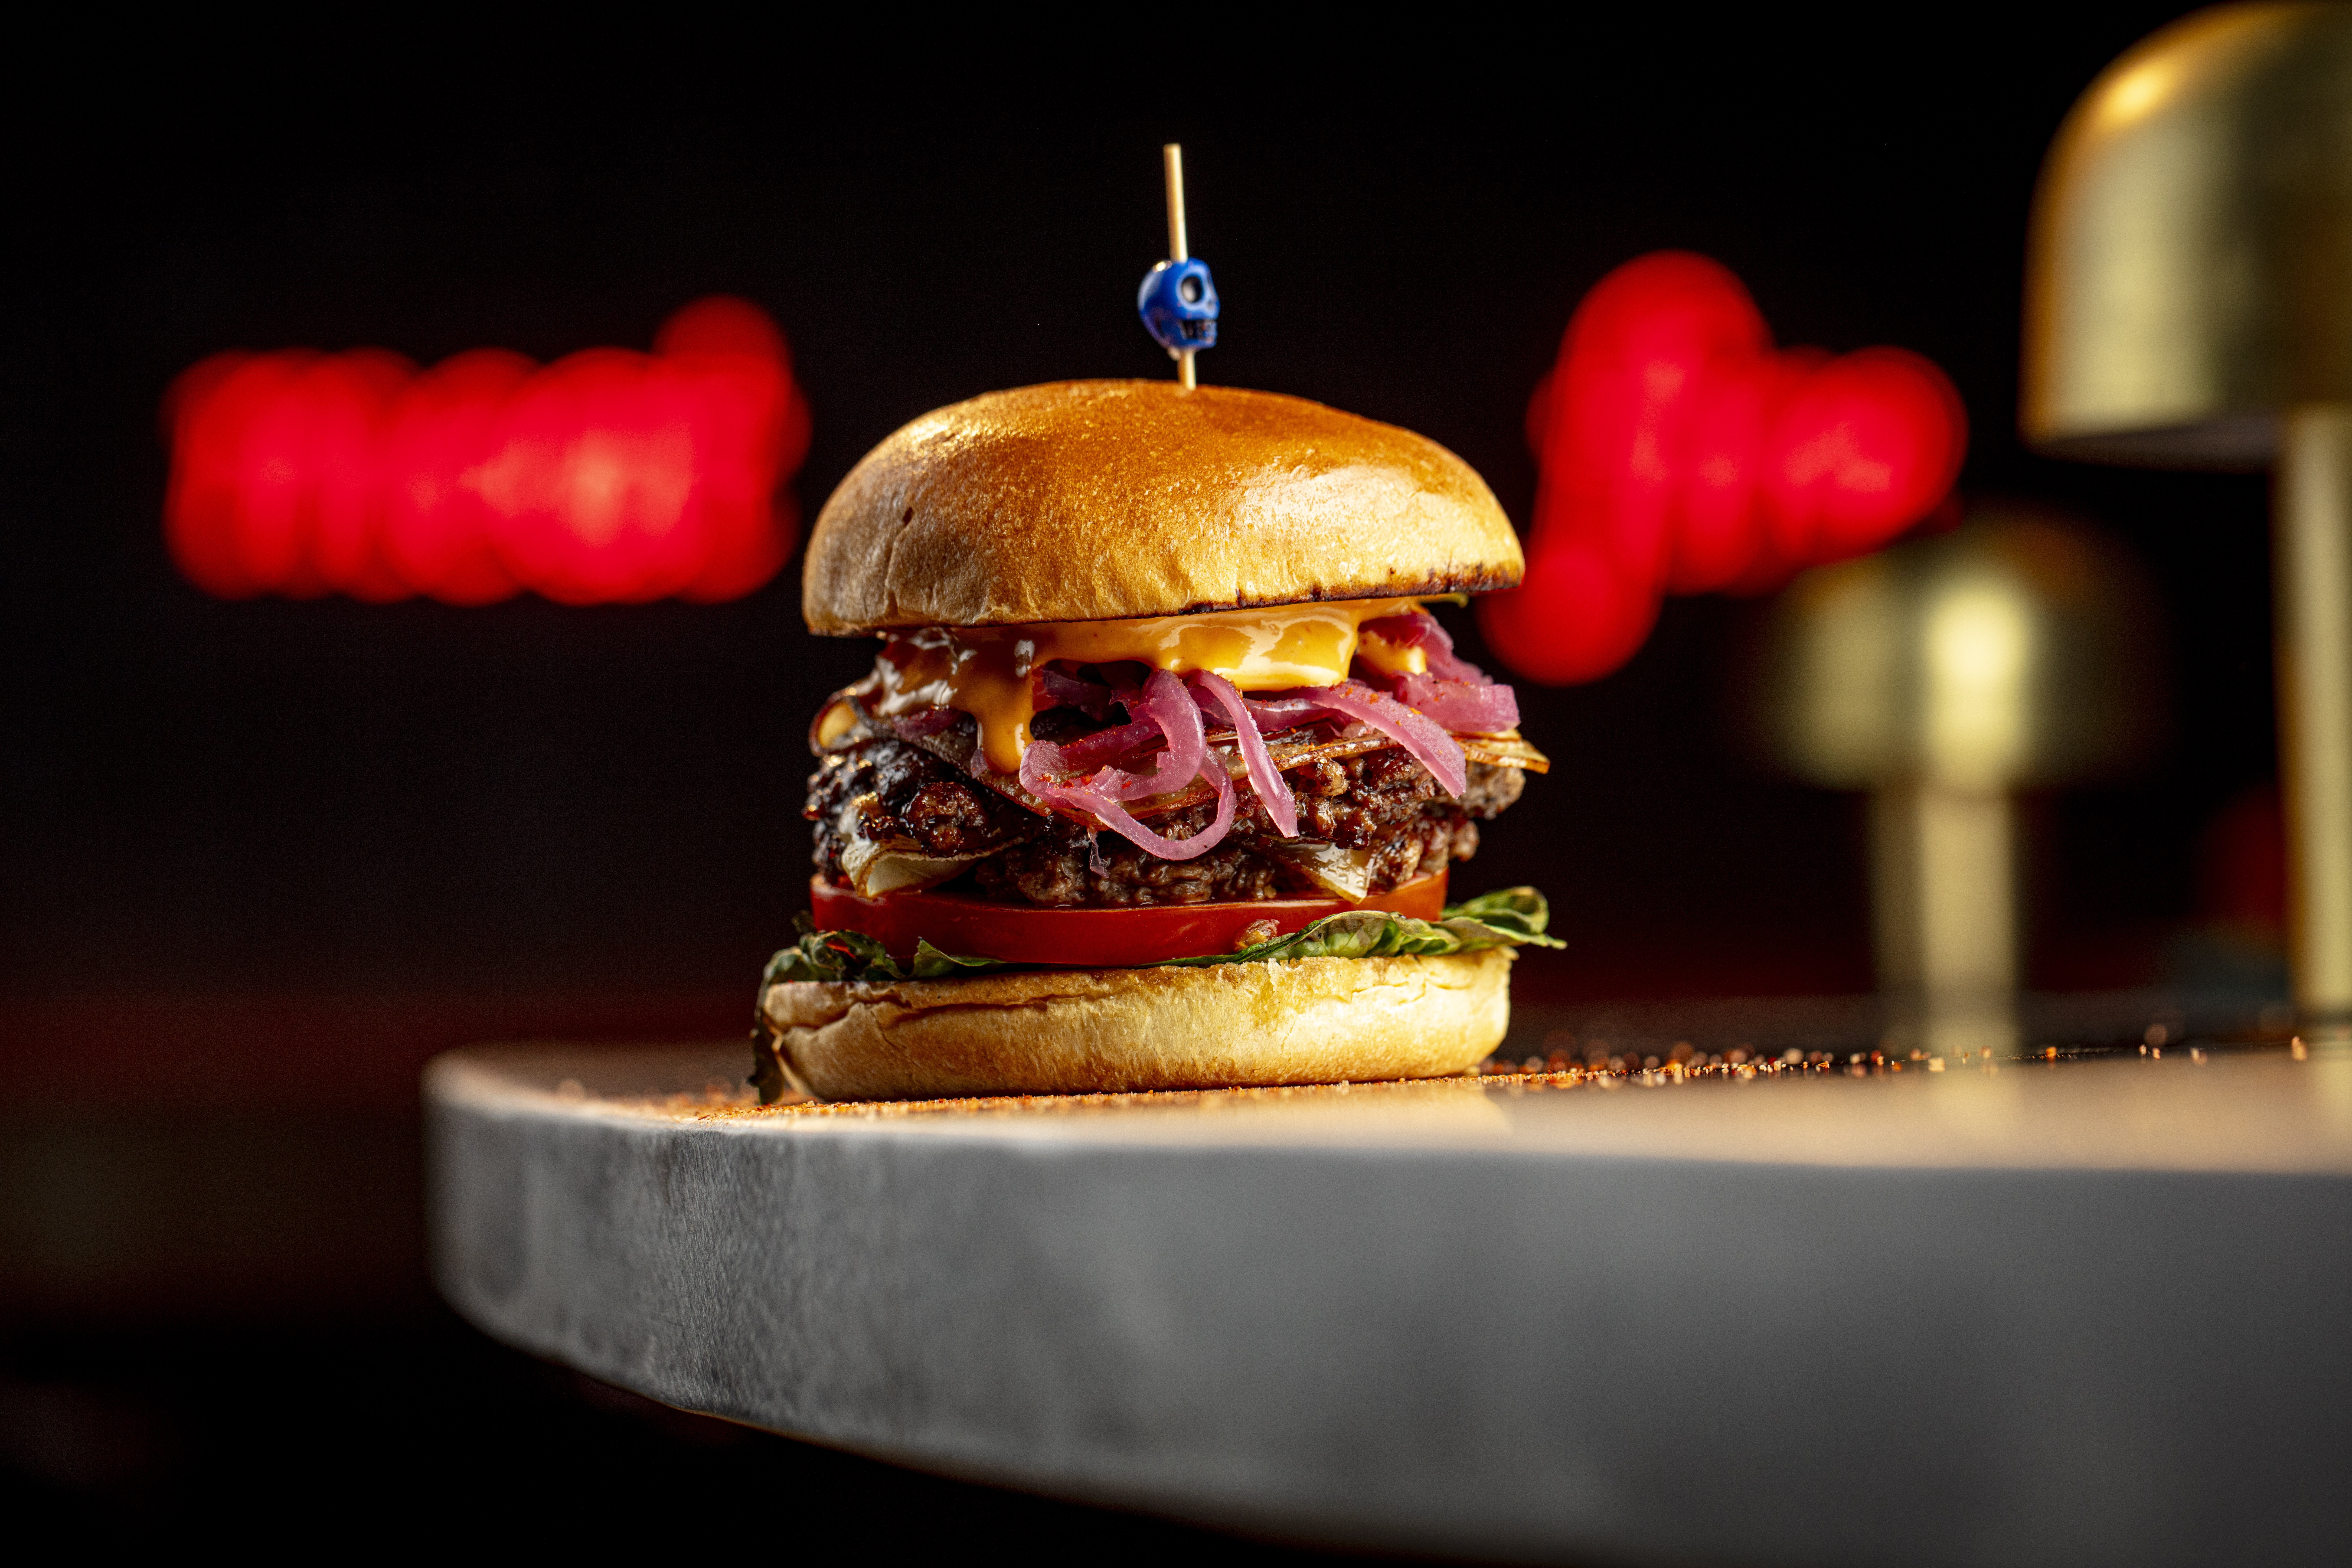 Temper to launch new smash burger restaurant concept